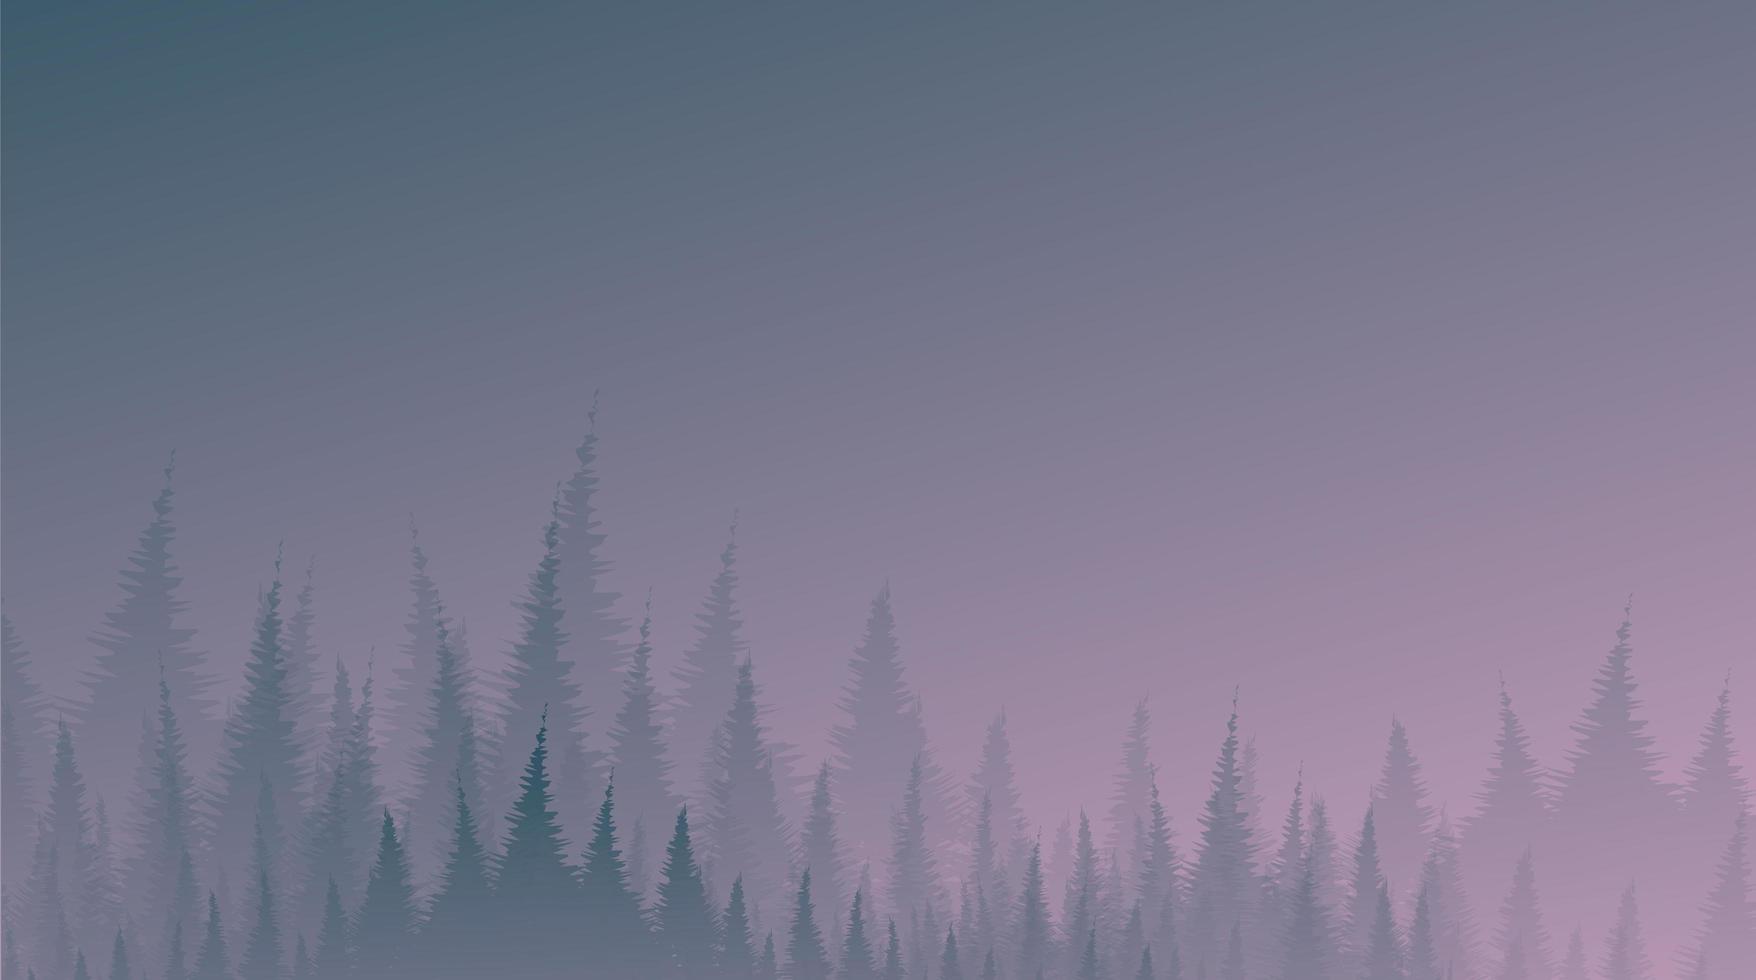 Night Foggy and mist Pine Forest, landscape background, imagination concept design